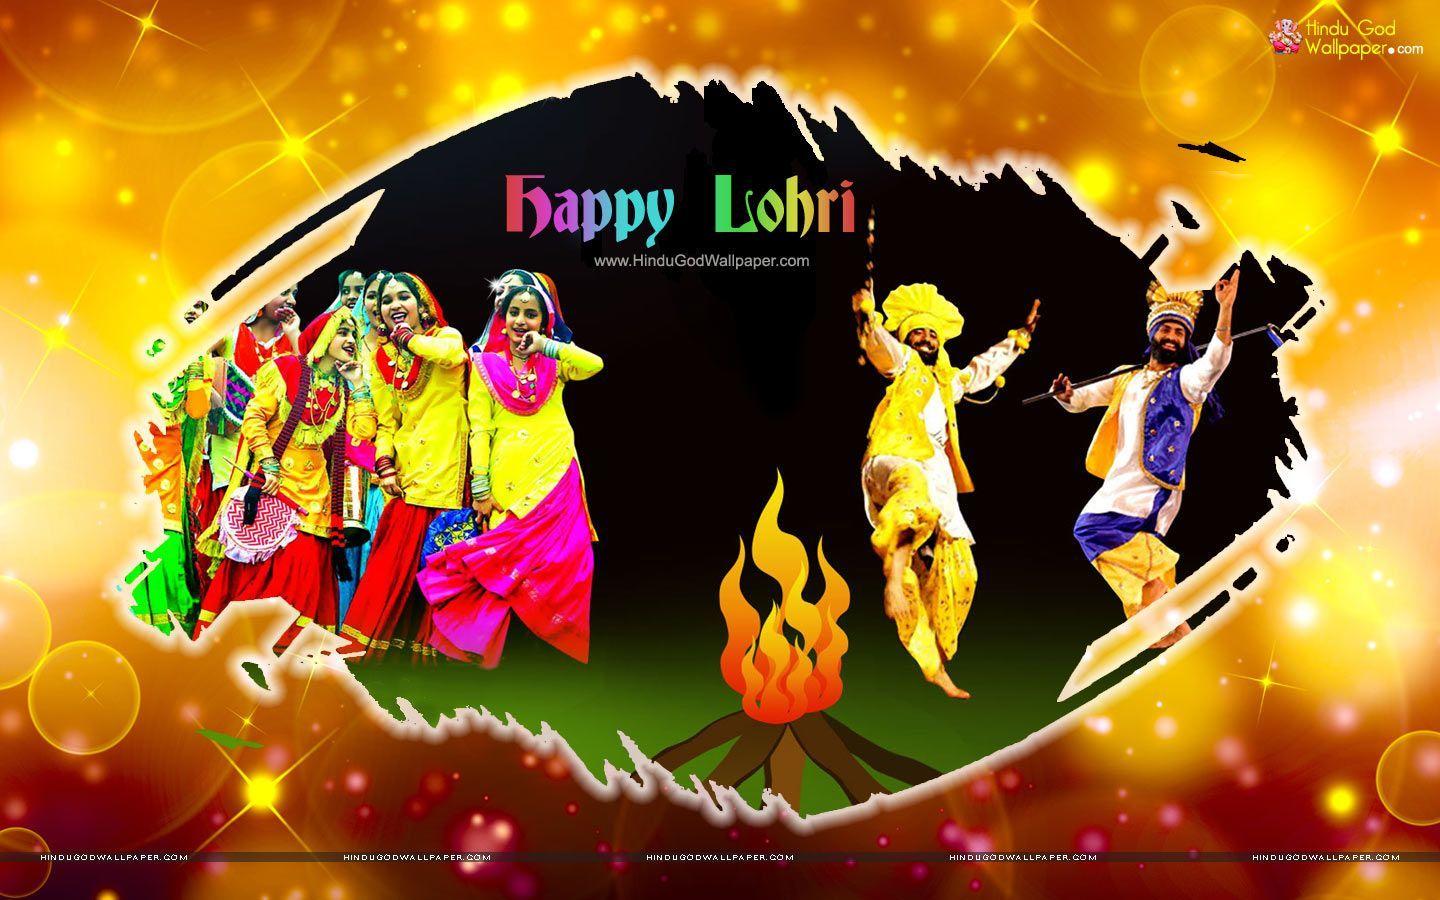 Happy Lohri HD Wallpaper Full Size Free Download. Lohri Wallpaper